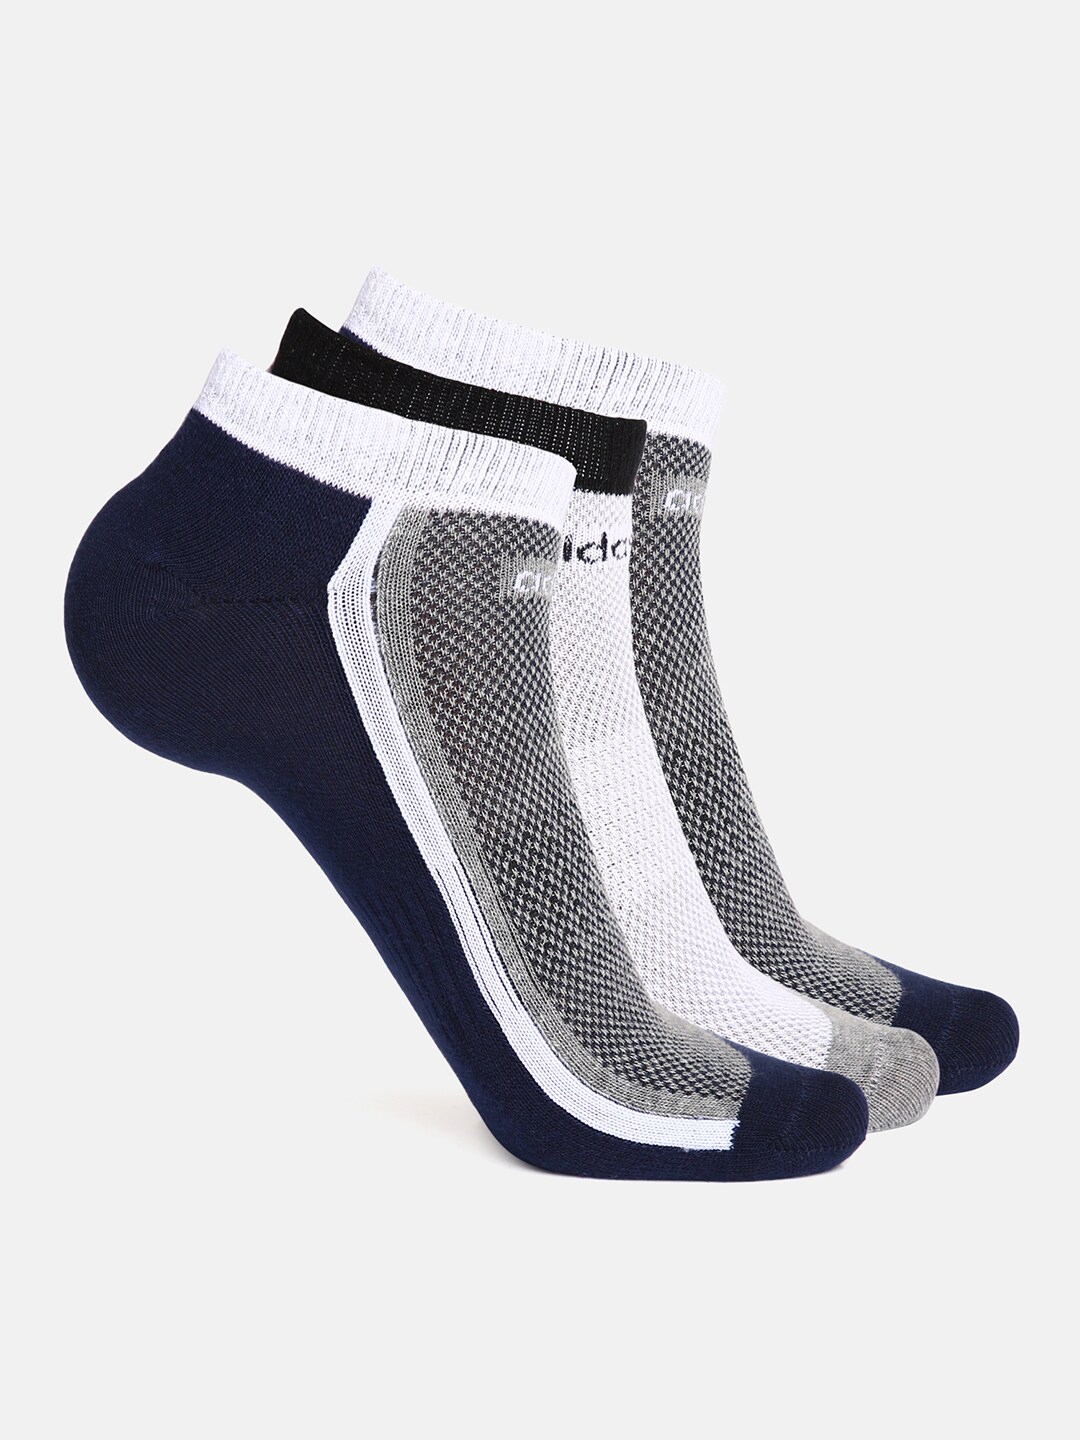 ADIDAS Men Pack Of 3 Assorted Patterned Ankle Length Socks